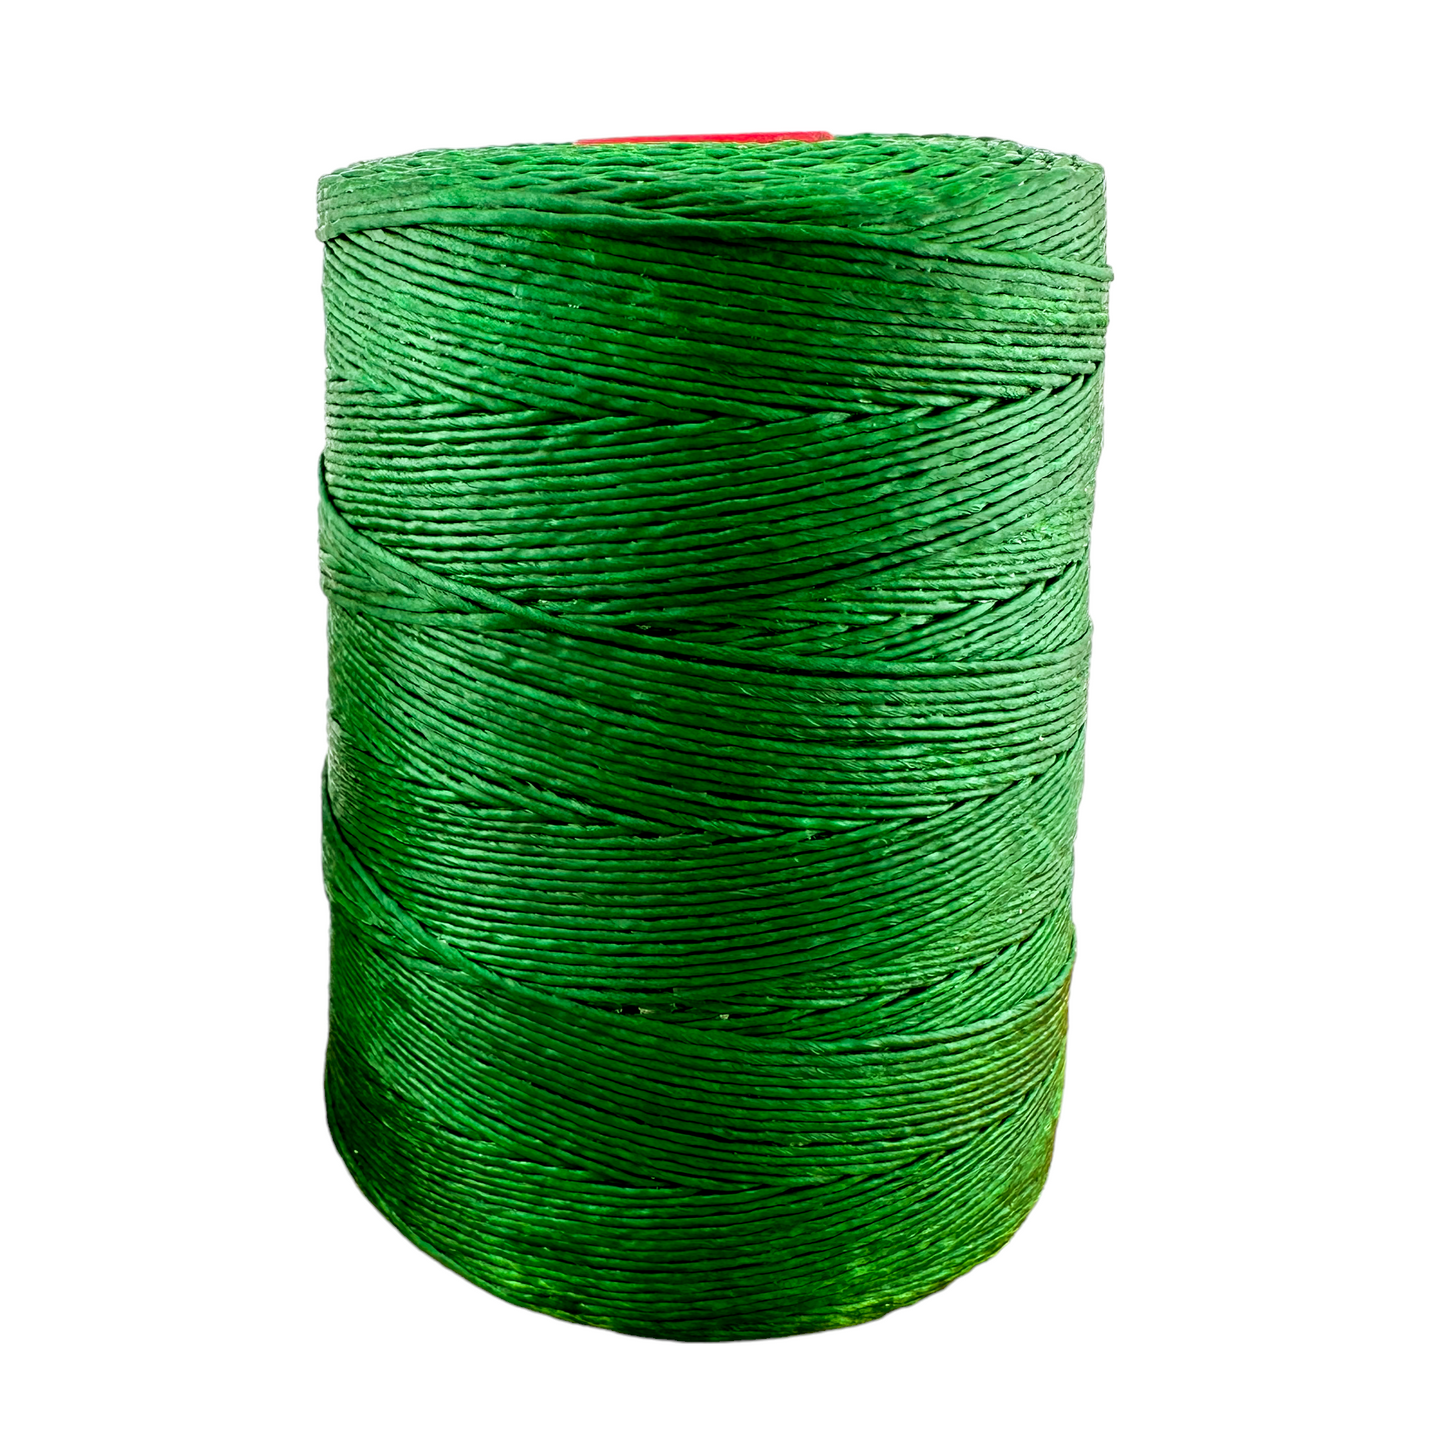 600 Meter Macrame Cord Spool - Bright Green